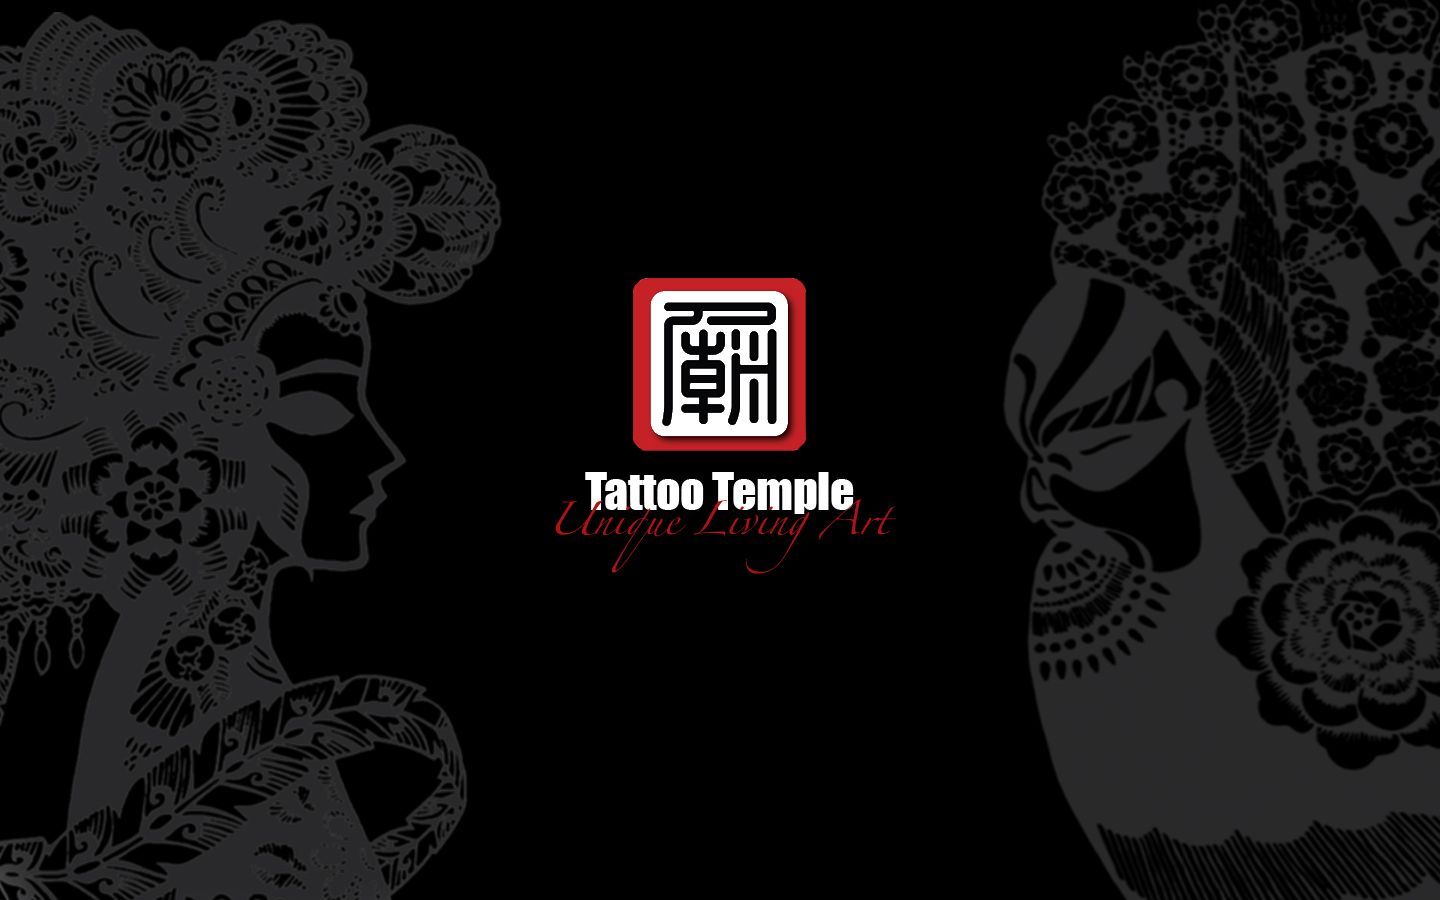 Tattoo Temple Art Wallpaper For Your Desktop